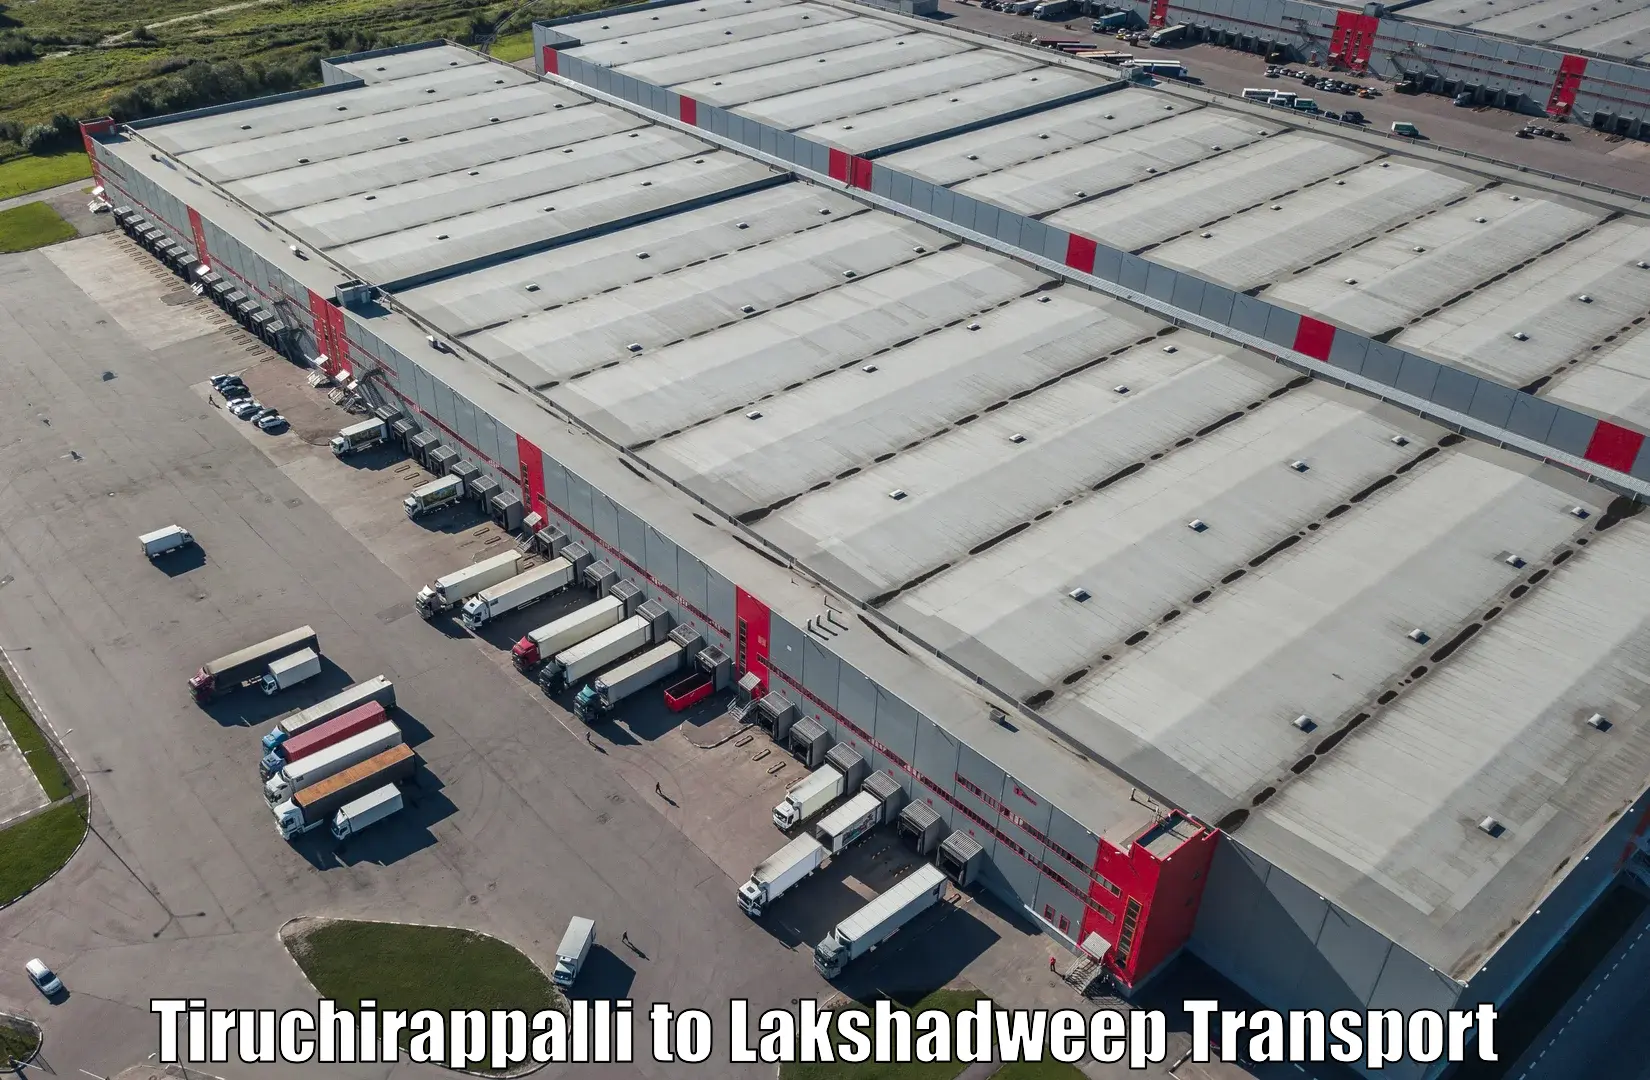 Truck transport companies in India in Tiruchirappalli to Lakshadweep